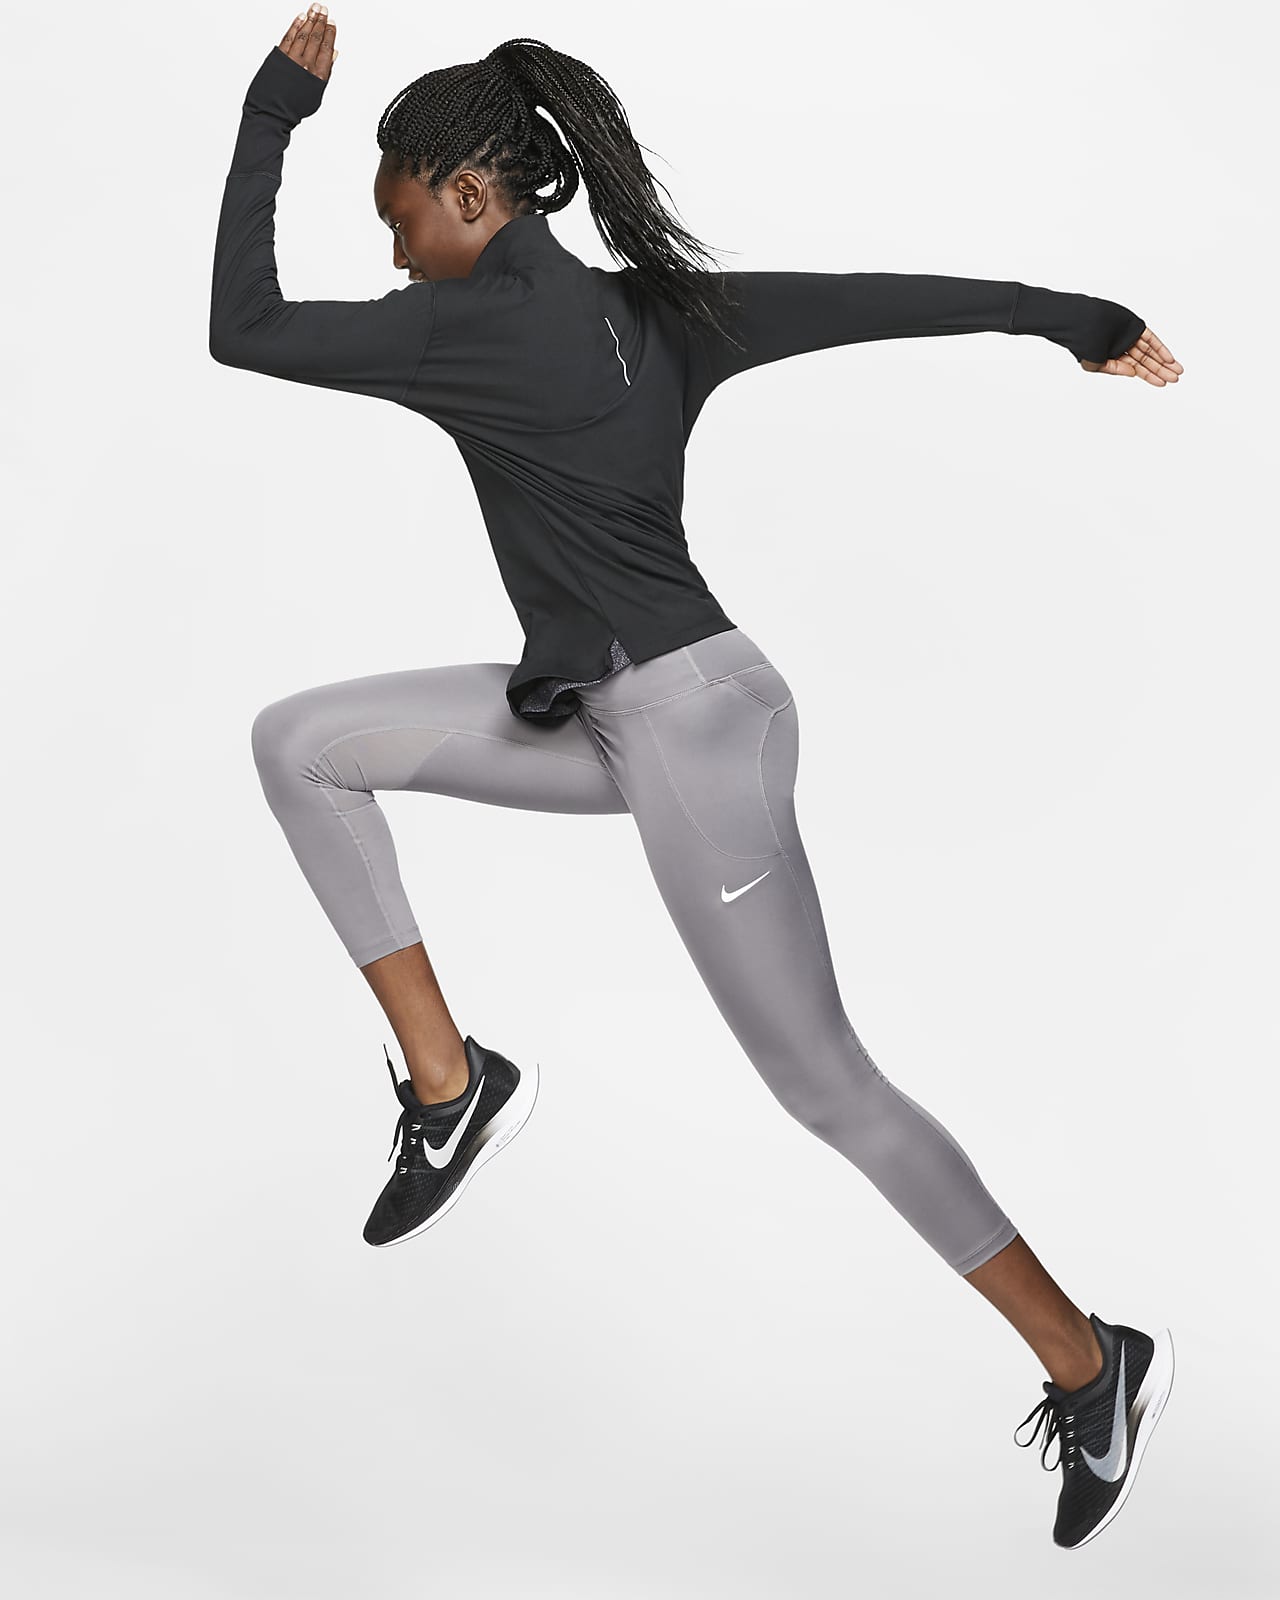 NWT $80 Nike Running Women's Faster Dri-Fit 7/8 Leggings DQ1055